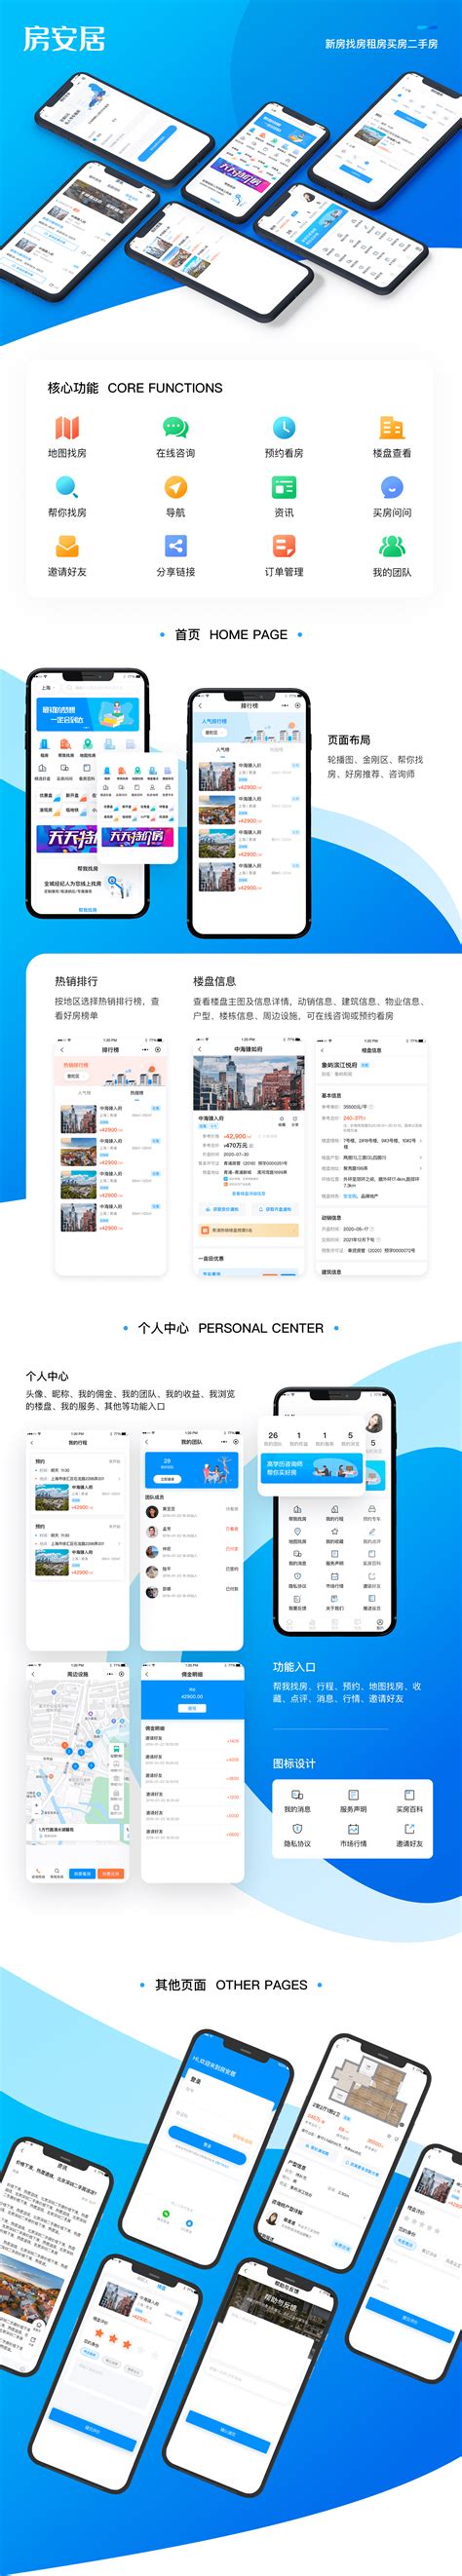 VR看房_房地产APP_房产小程序_上海西陆信息科技有限公司